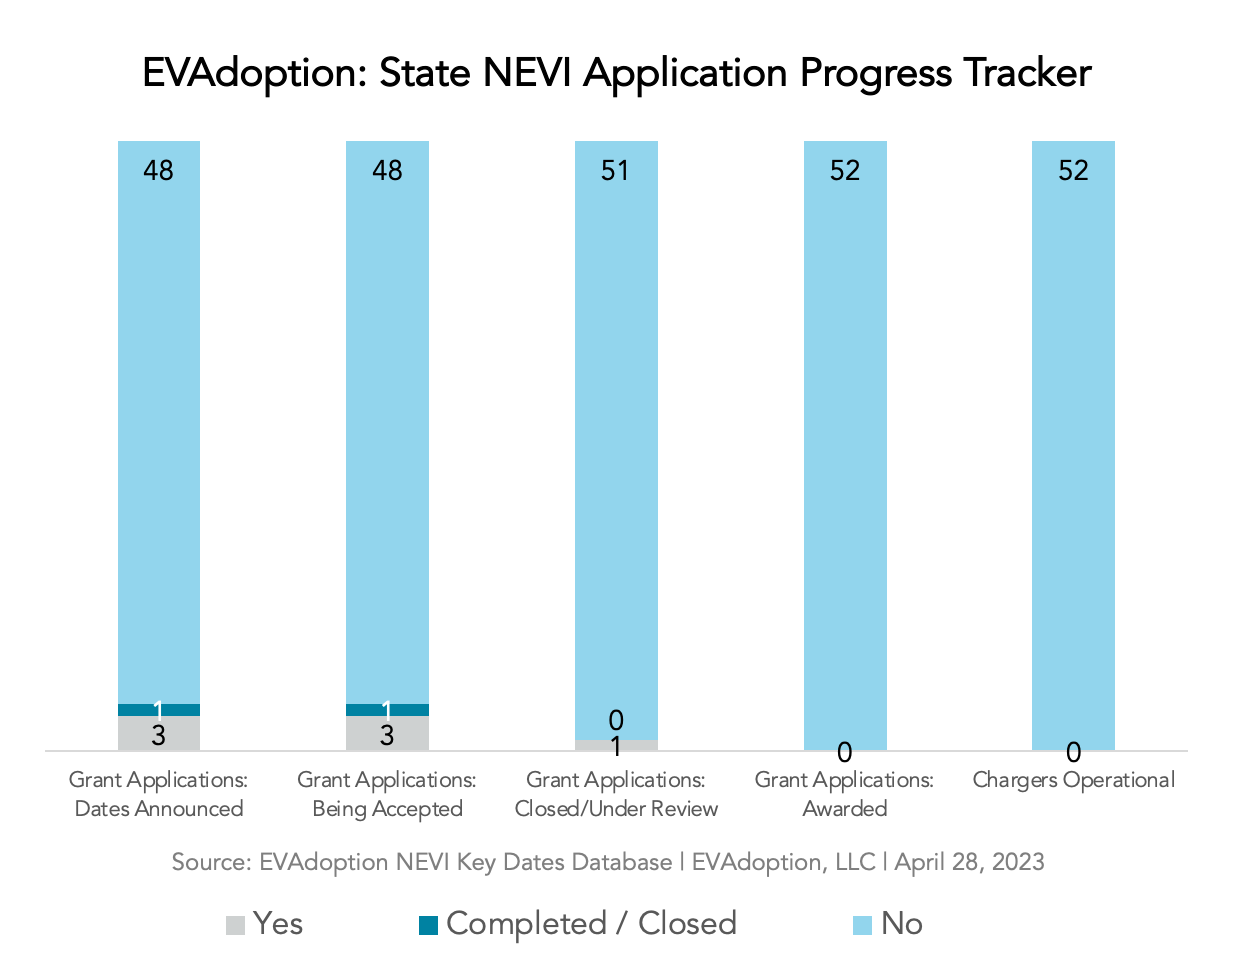 State NEVI Application Progress Tracker-EVAdoption